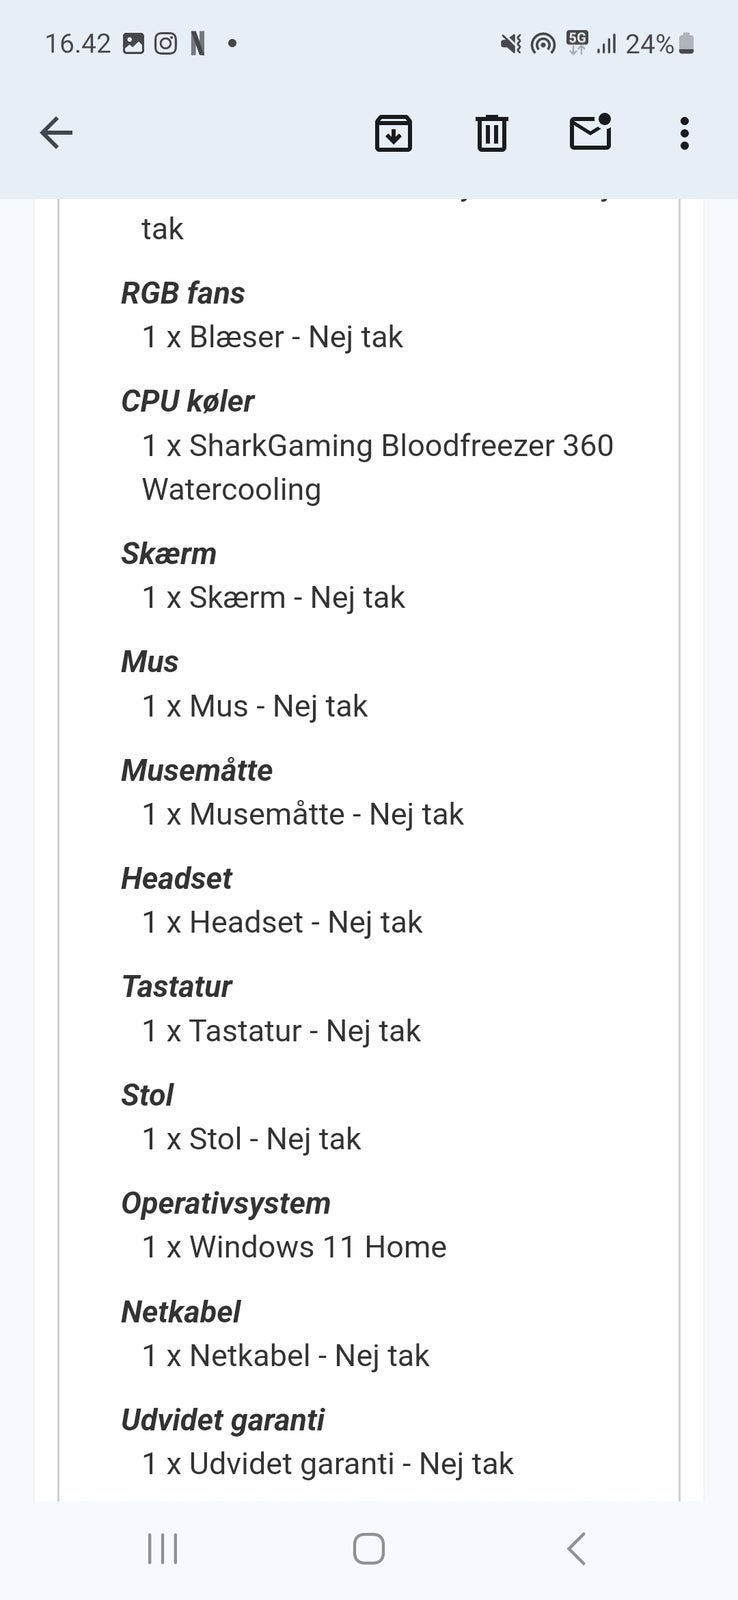 Andet mærke, Shark gaming custom, AMD ryzen 9 5900x Ghz